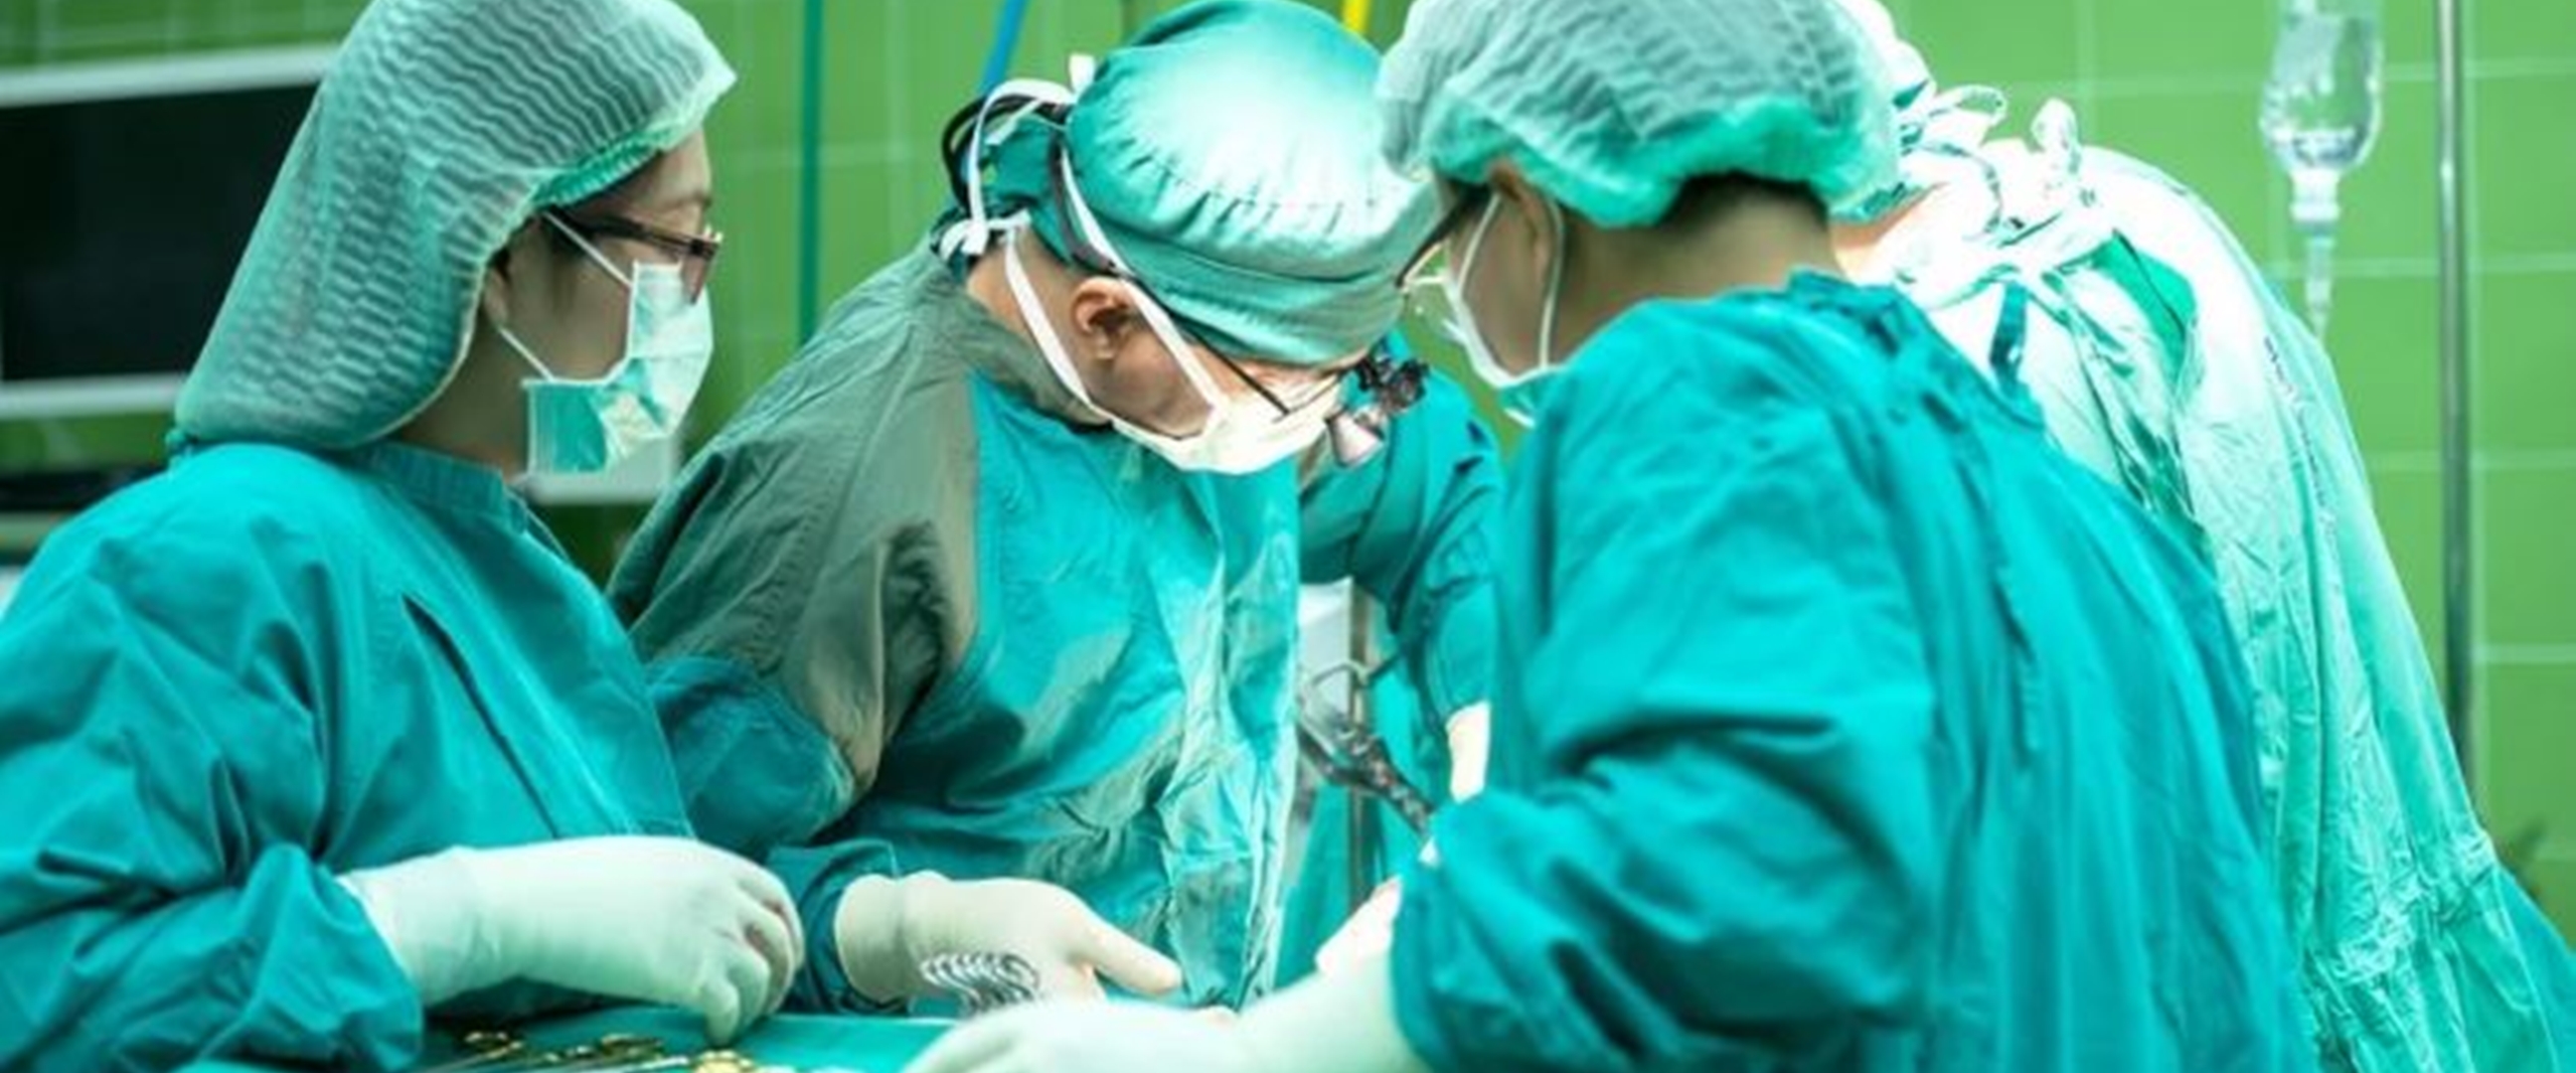 Pertama kali terjadi, tim medis transplantasi ginjal babi ke manusia